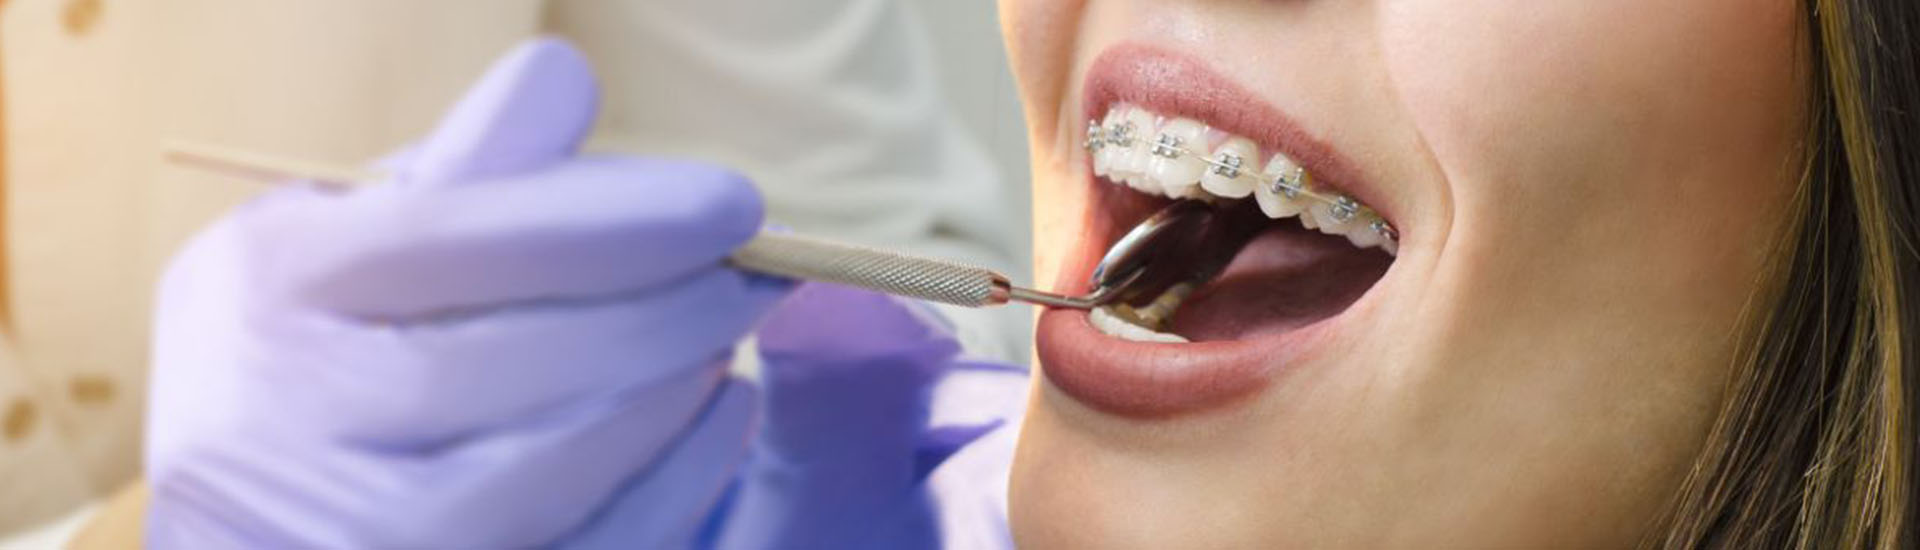 ortodonzia odontoiatria medical group italia